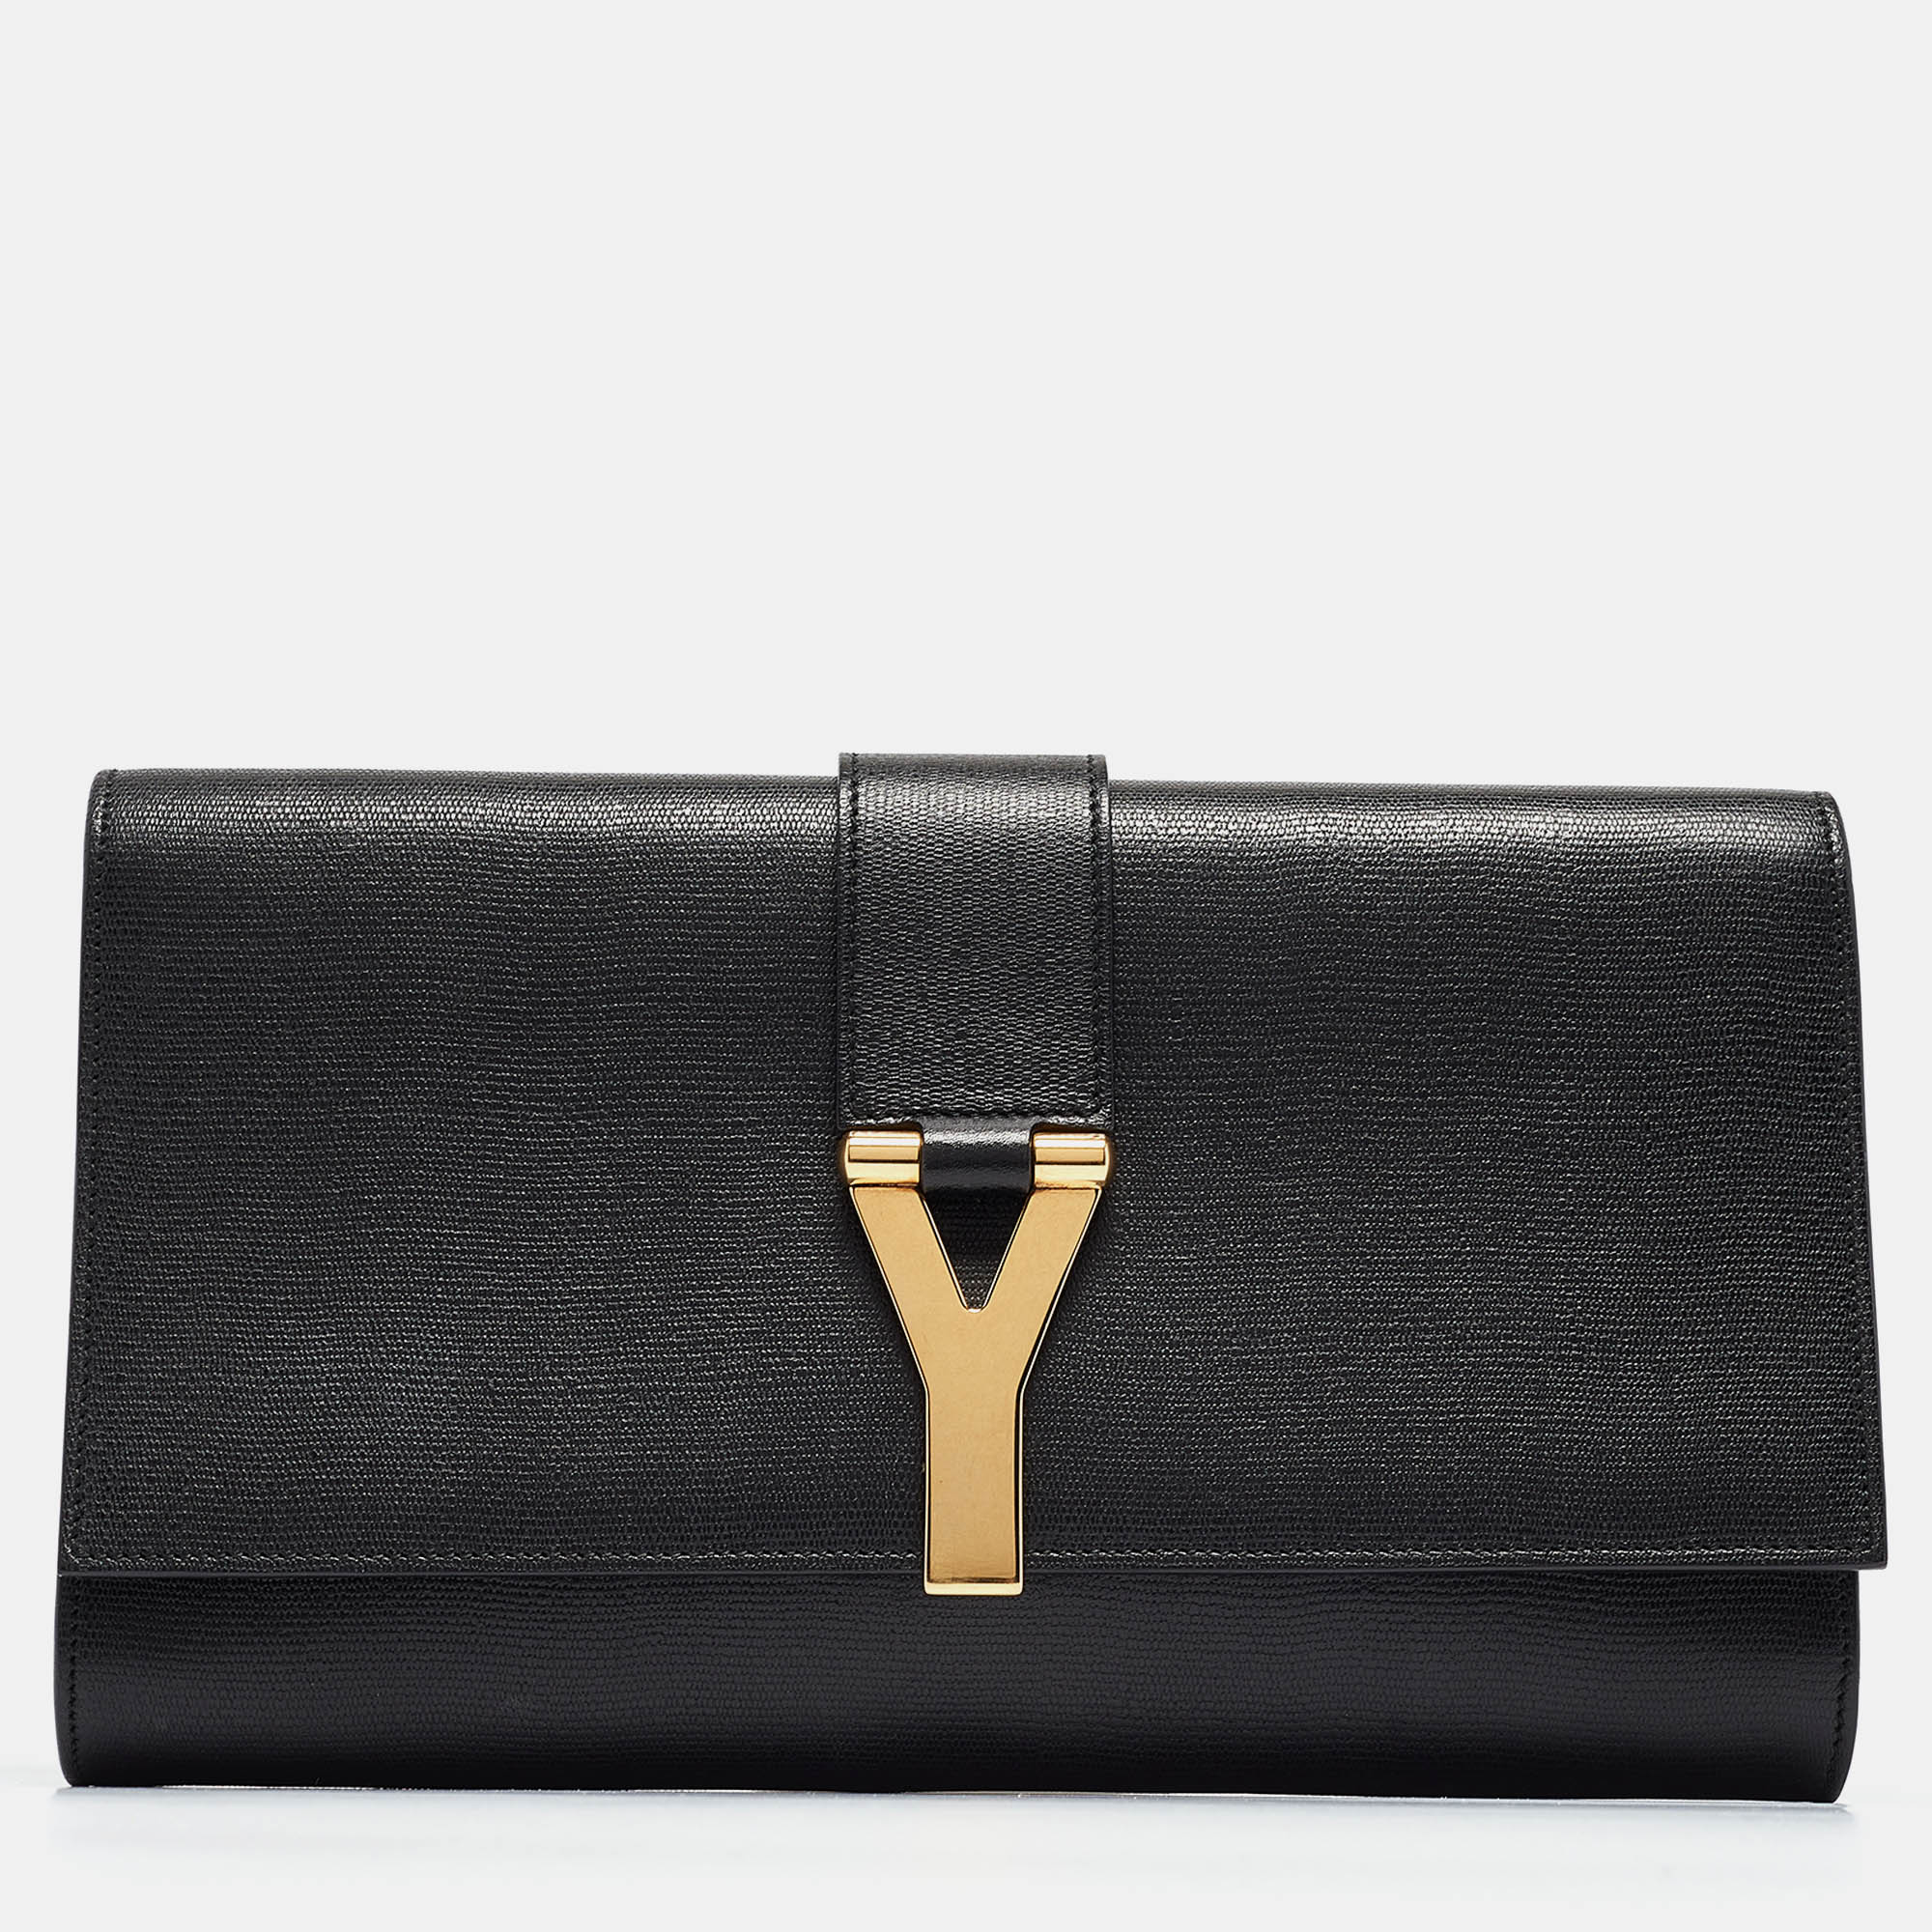 

Yves Saint Laurent Black Leather Large Chyc Clutch